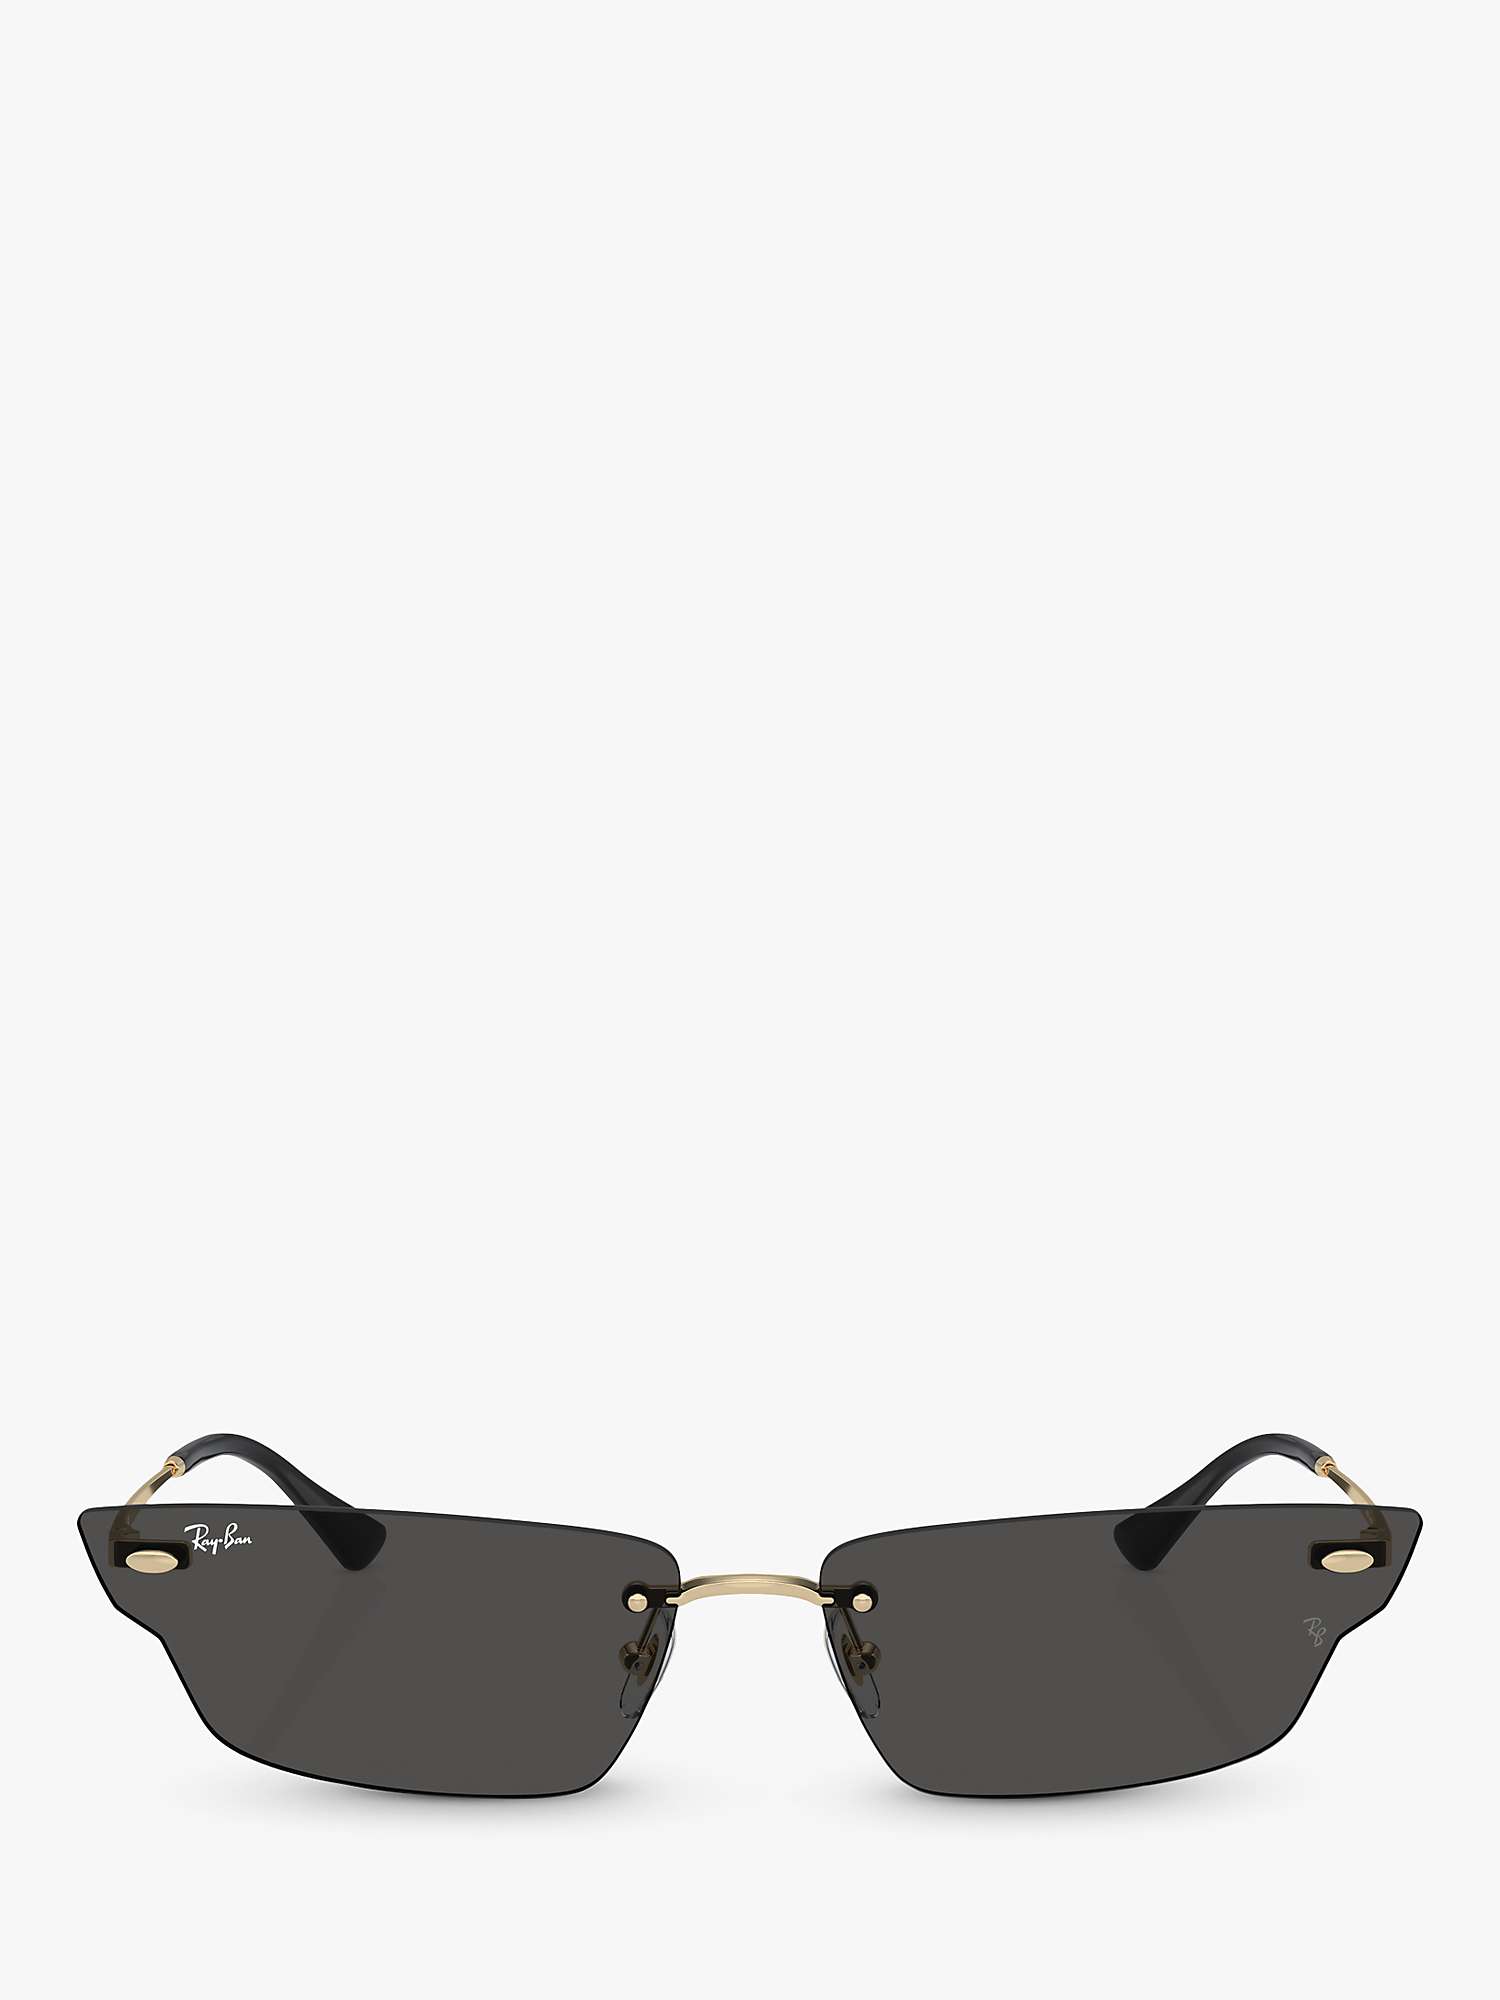 Buy Ray-Ban RB3731 Unisex Rectangular Sunglasses, Light Gold/Black Online at johnlewis.com